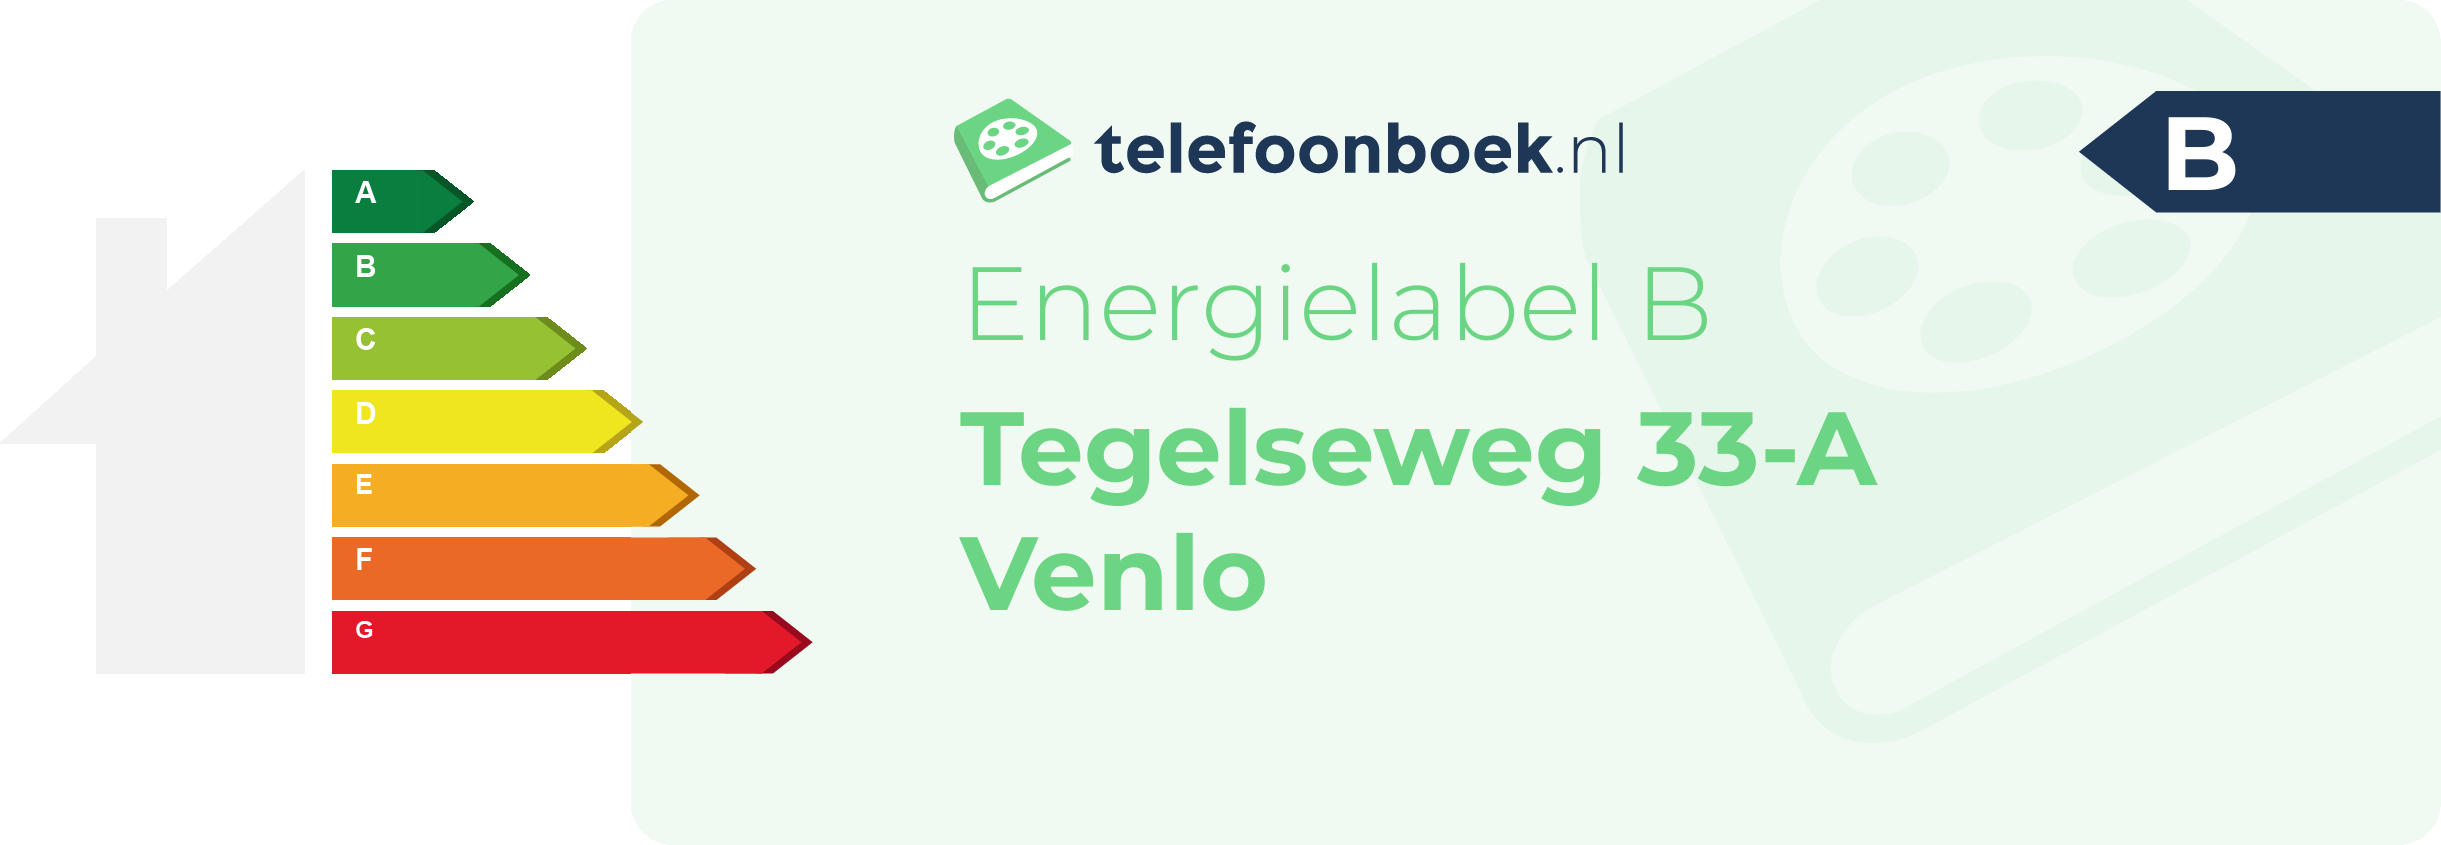 Energielabel Tegelseweg 33-A Venlo